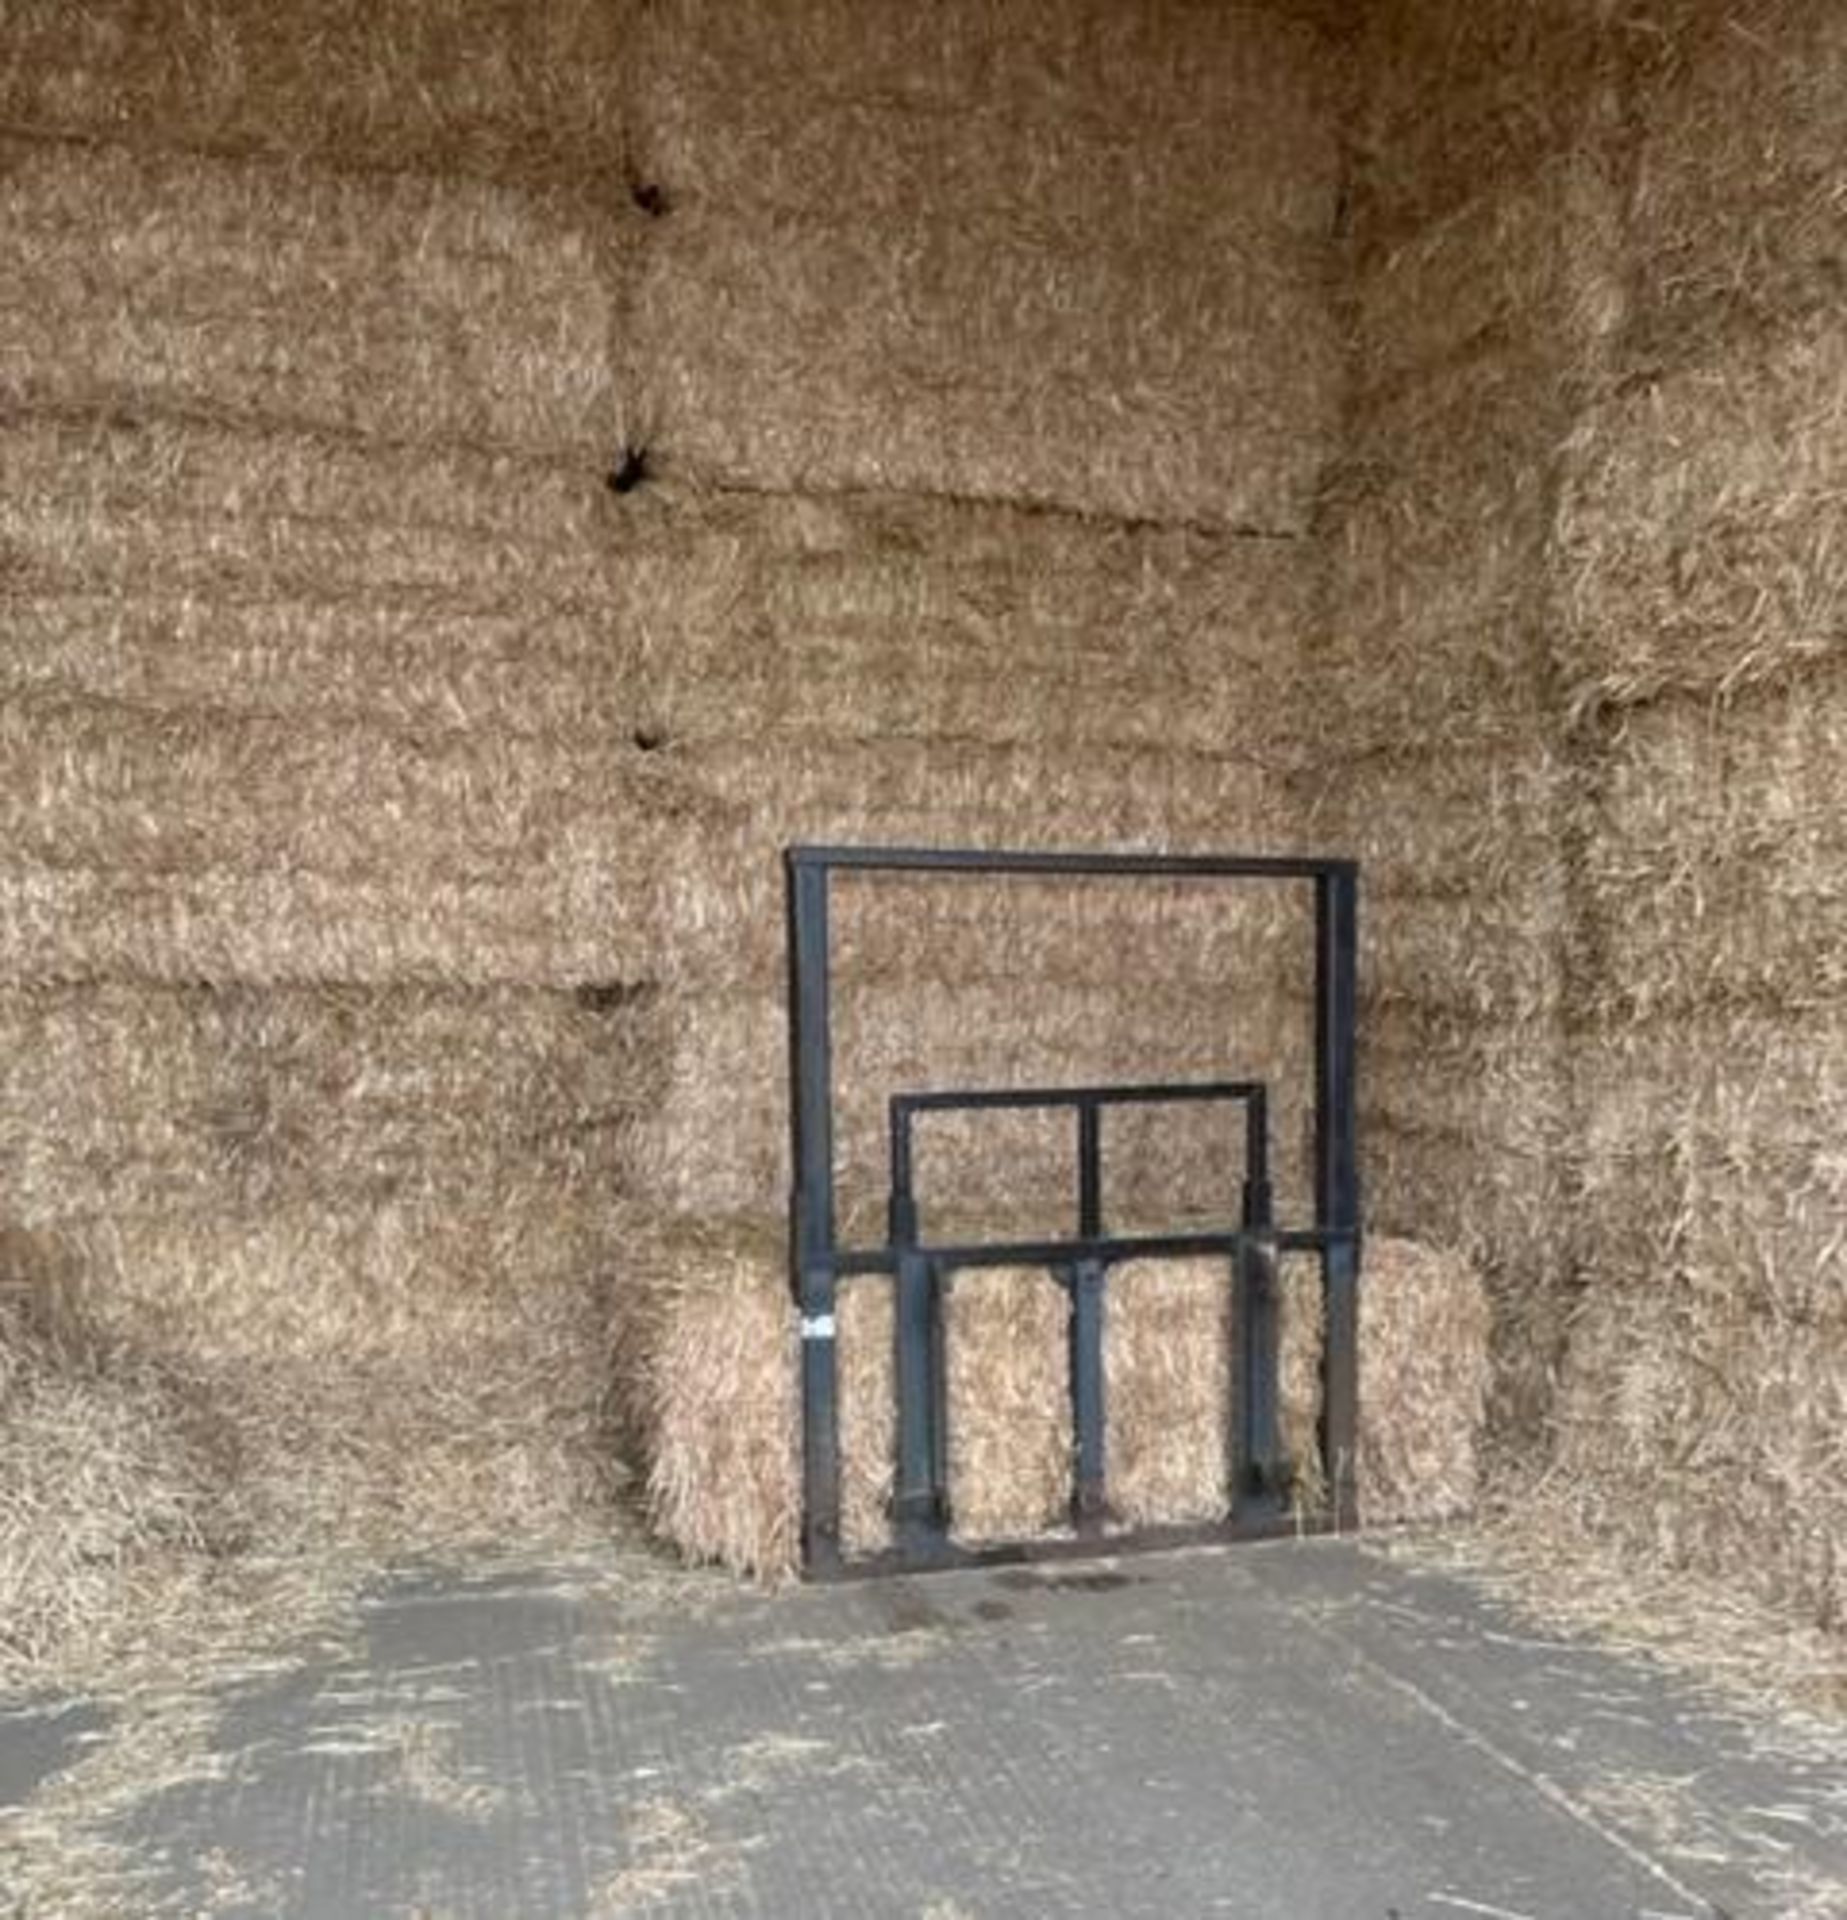 50 x 2022 Wheat Straw Bales